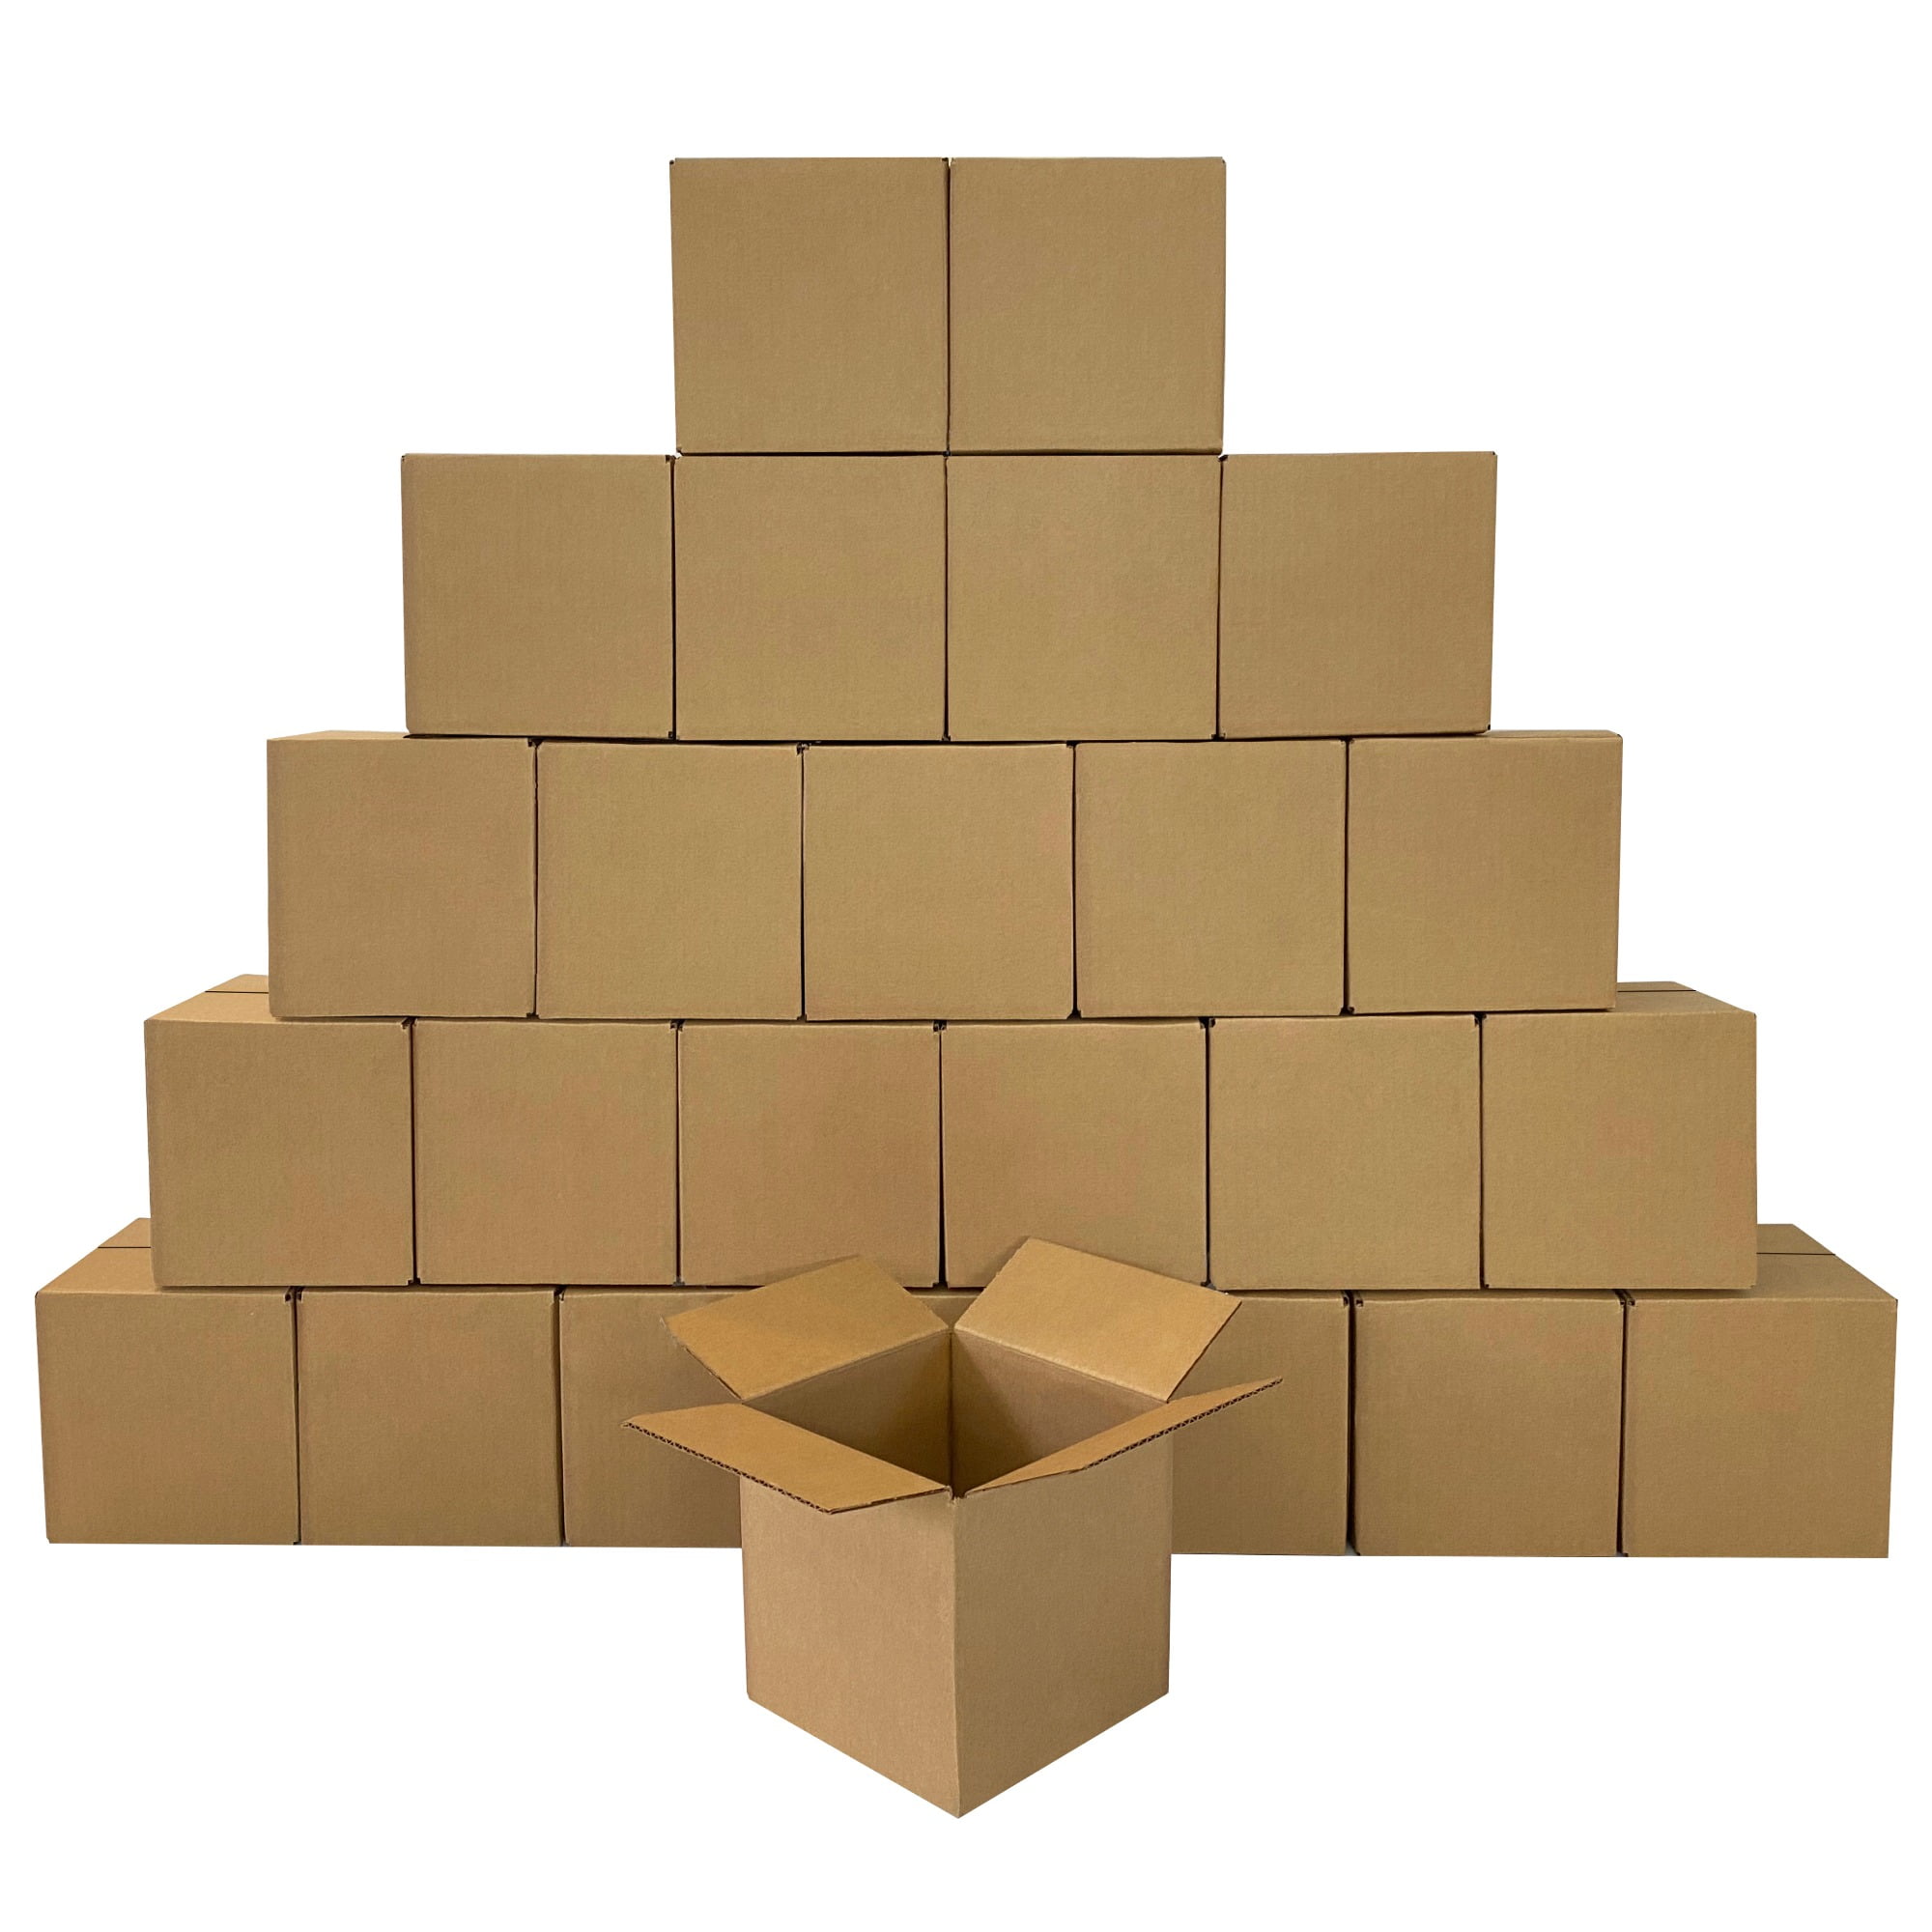 50 x Medium Cardboard Packing S/W Boxes 8x6x4